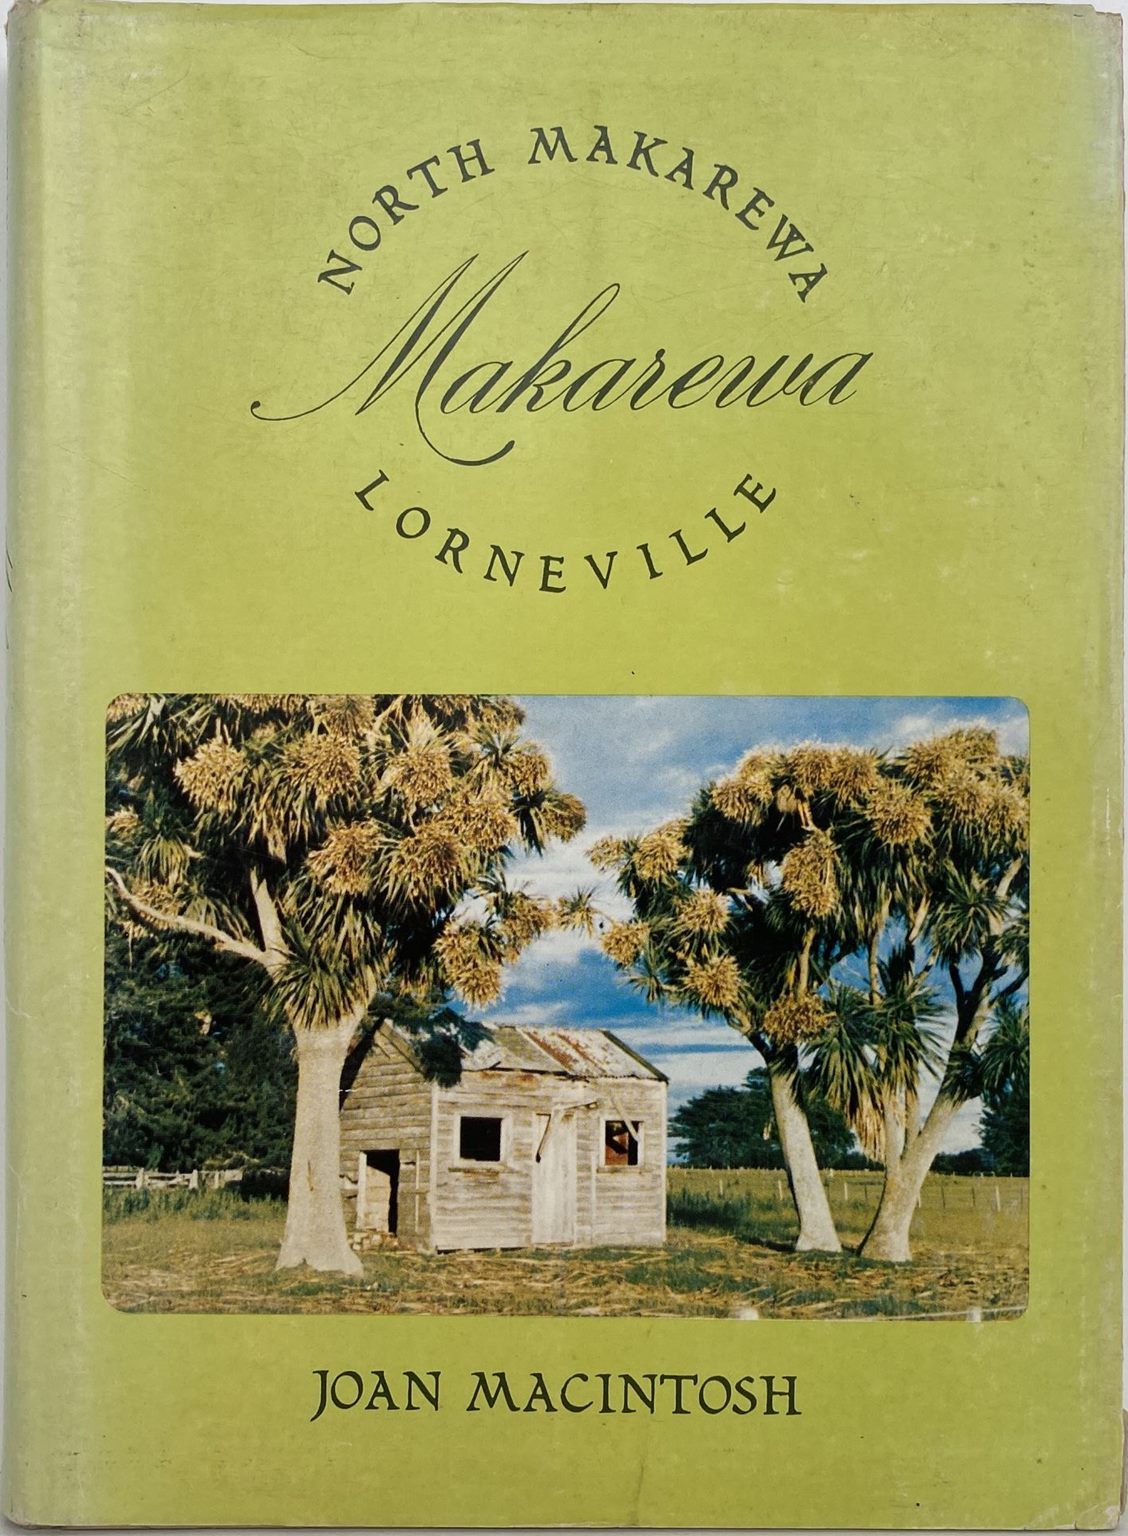 A REGIONAL HISTORY OF MAKAWERA - North Makarewa - Lorneville